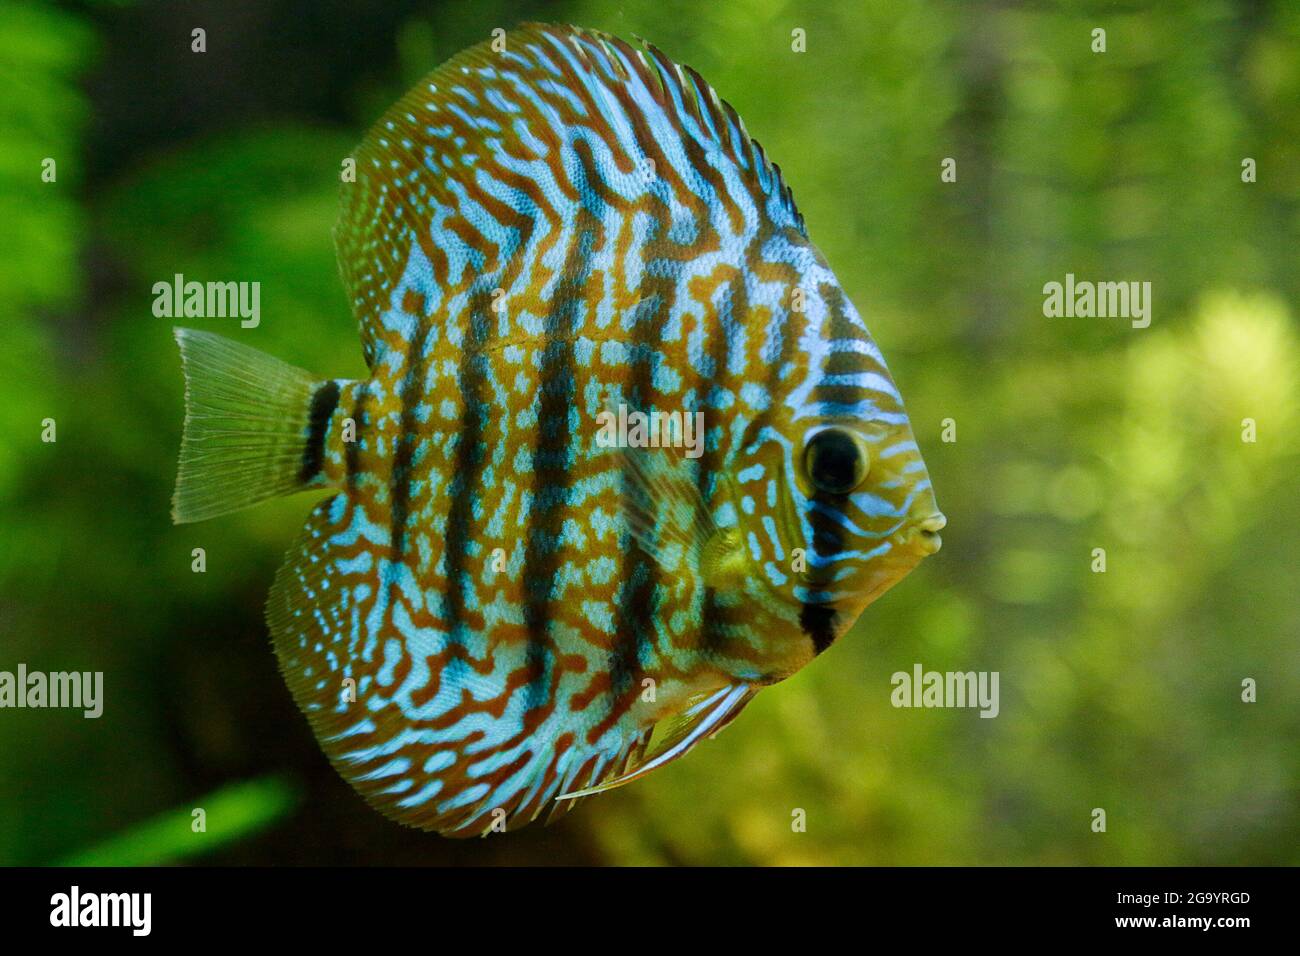 Symphysodon discus in a tropical aquarium Stock Photo